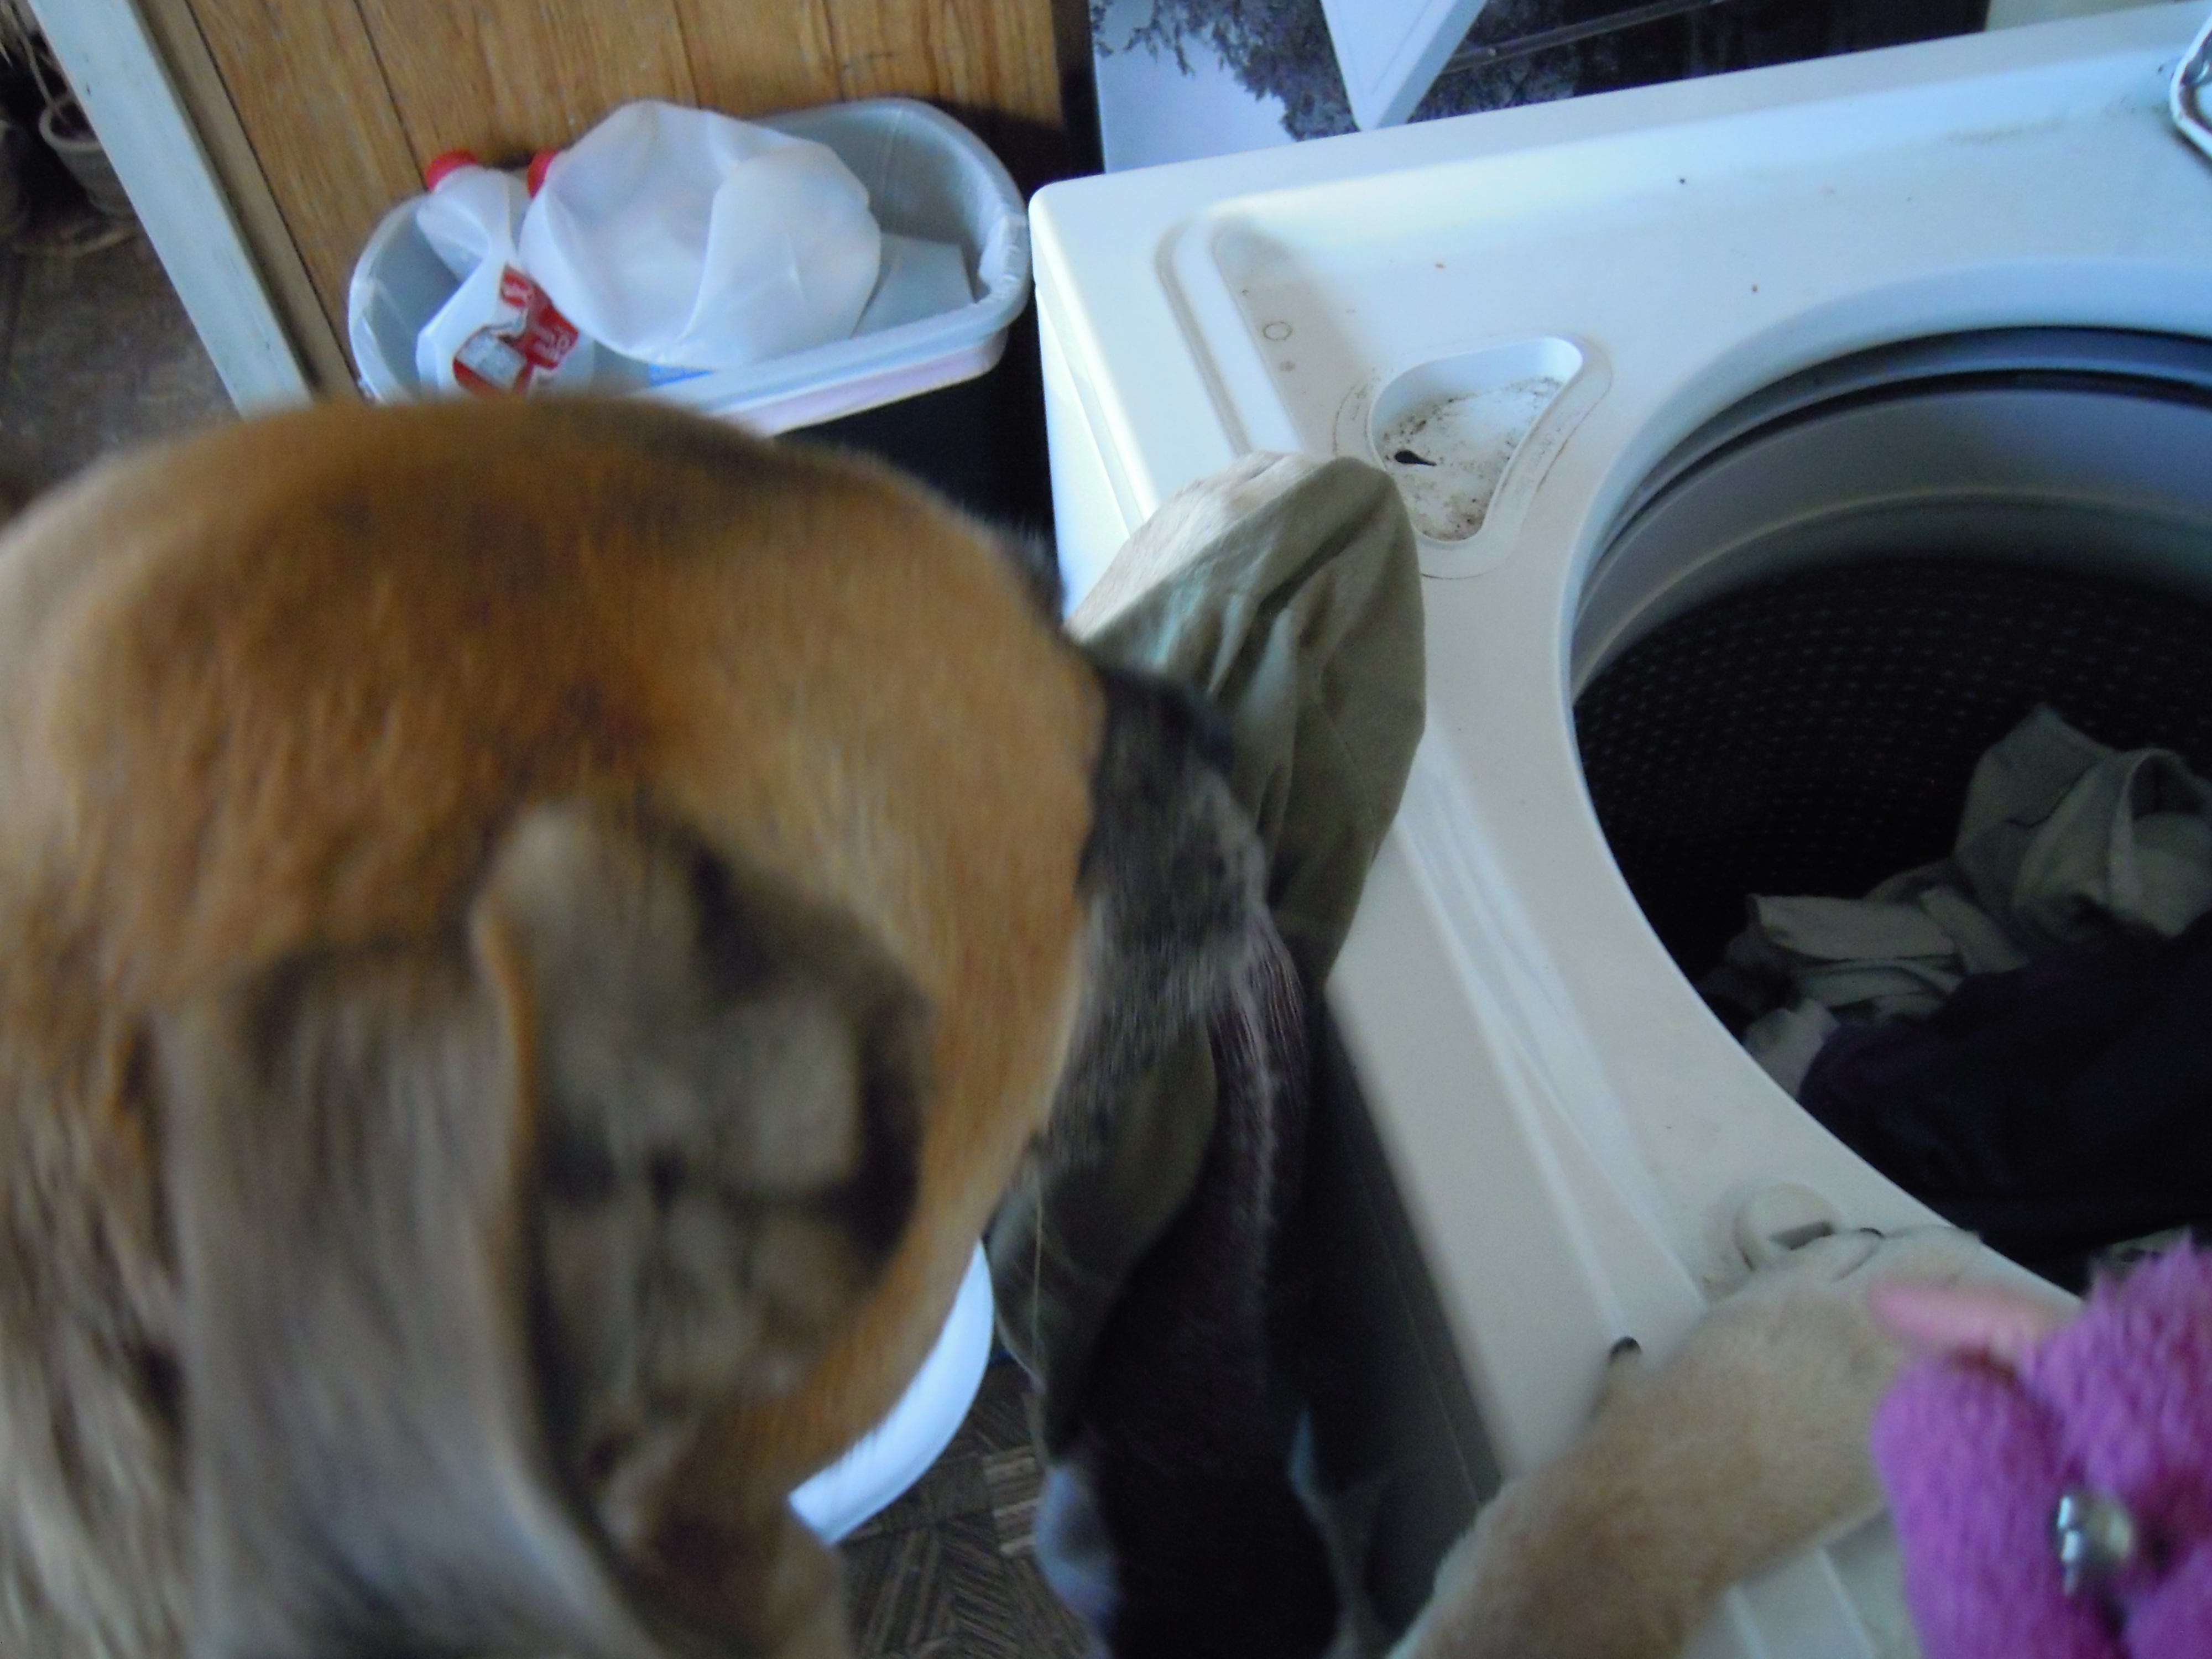 Sally's service dog helps load the washing machine.